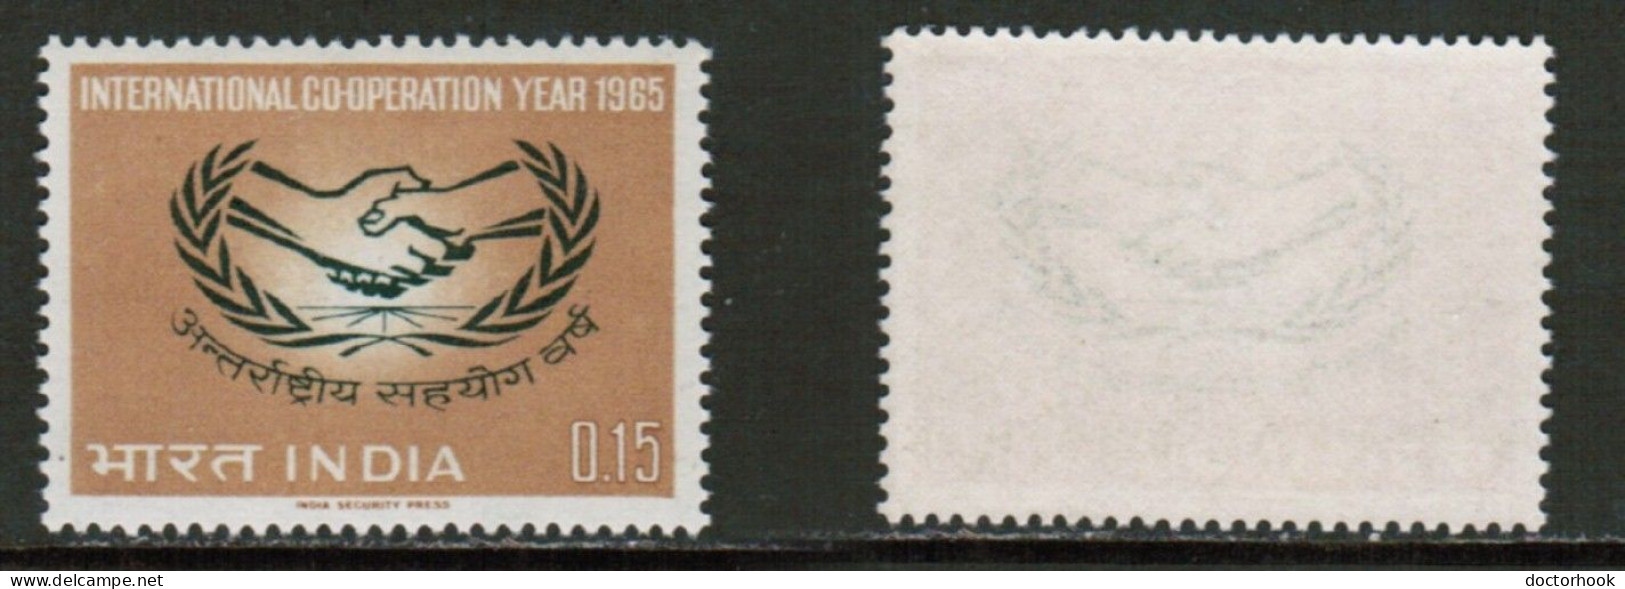 INDIA   Scott # 403** MINT NH (CONDITION AS PER SCAN) (Stamp Scan # 919-6) - Ungebraucht